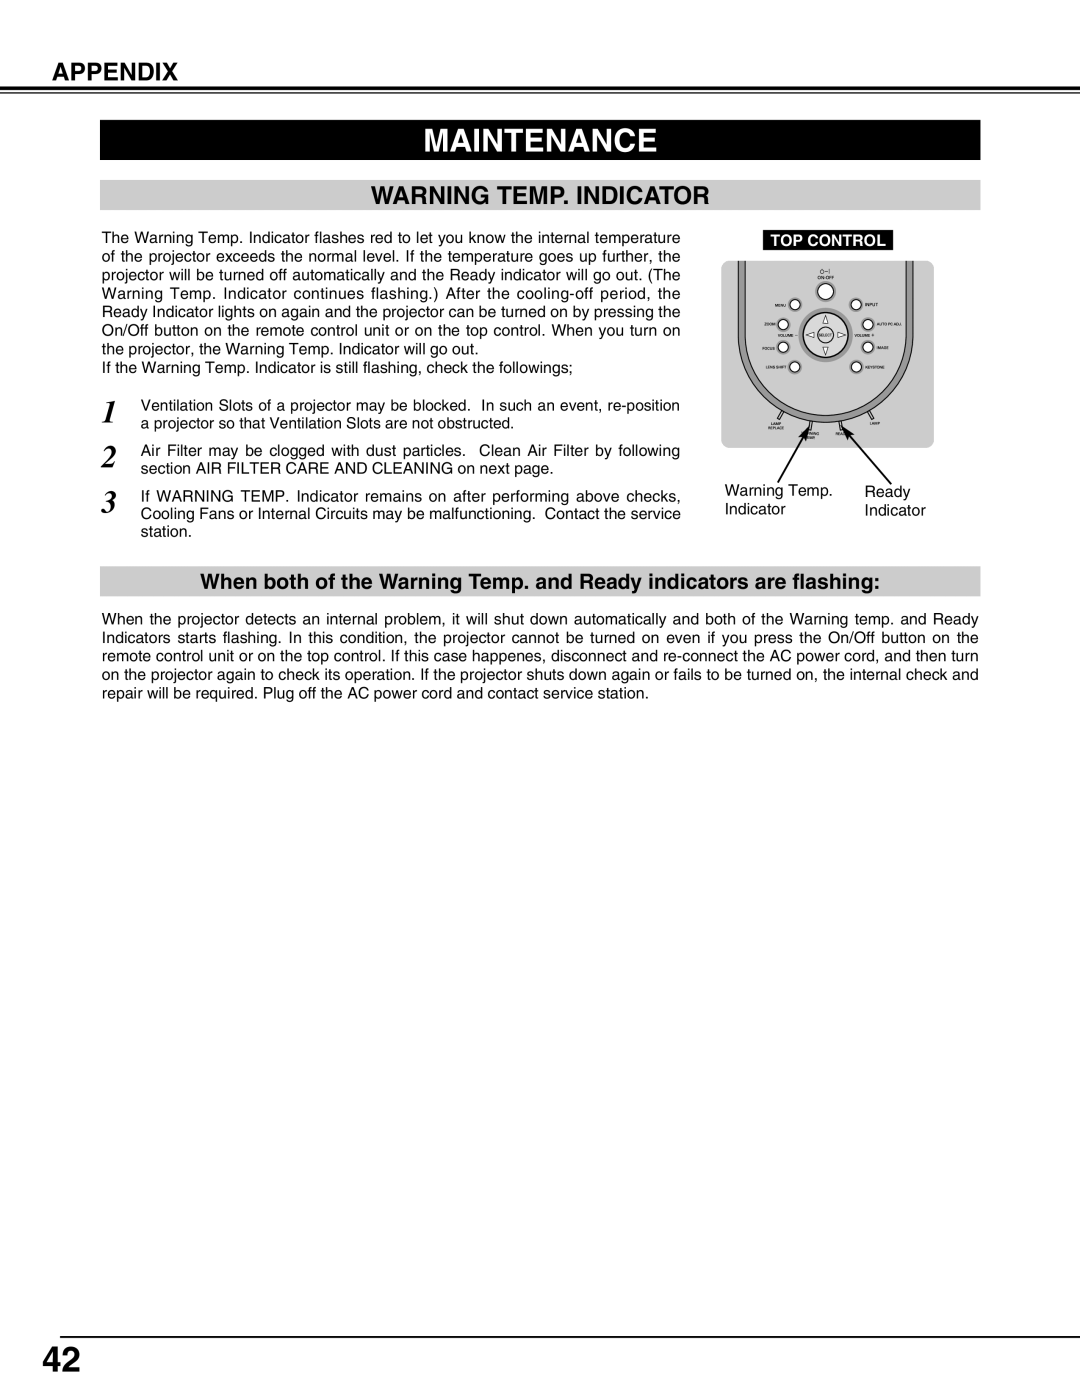 Eiki LC-X70 instruction manual Maintenance, Warning Temp. Indicator, Appendix 